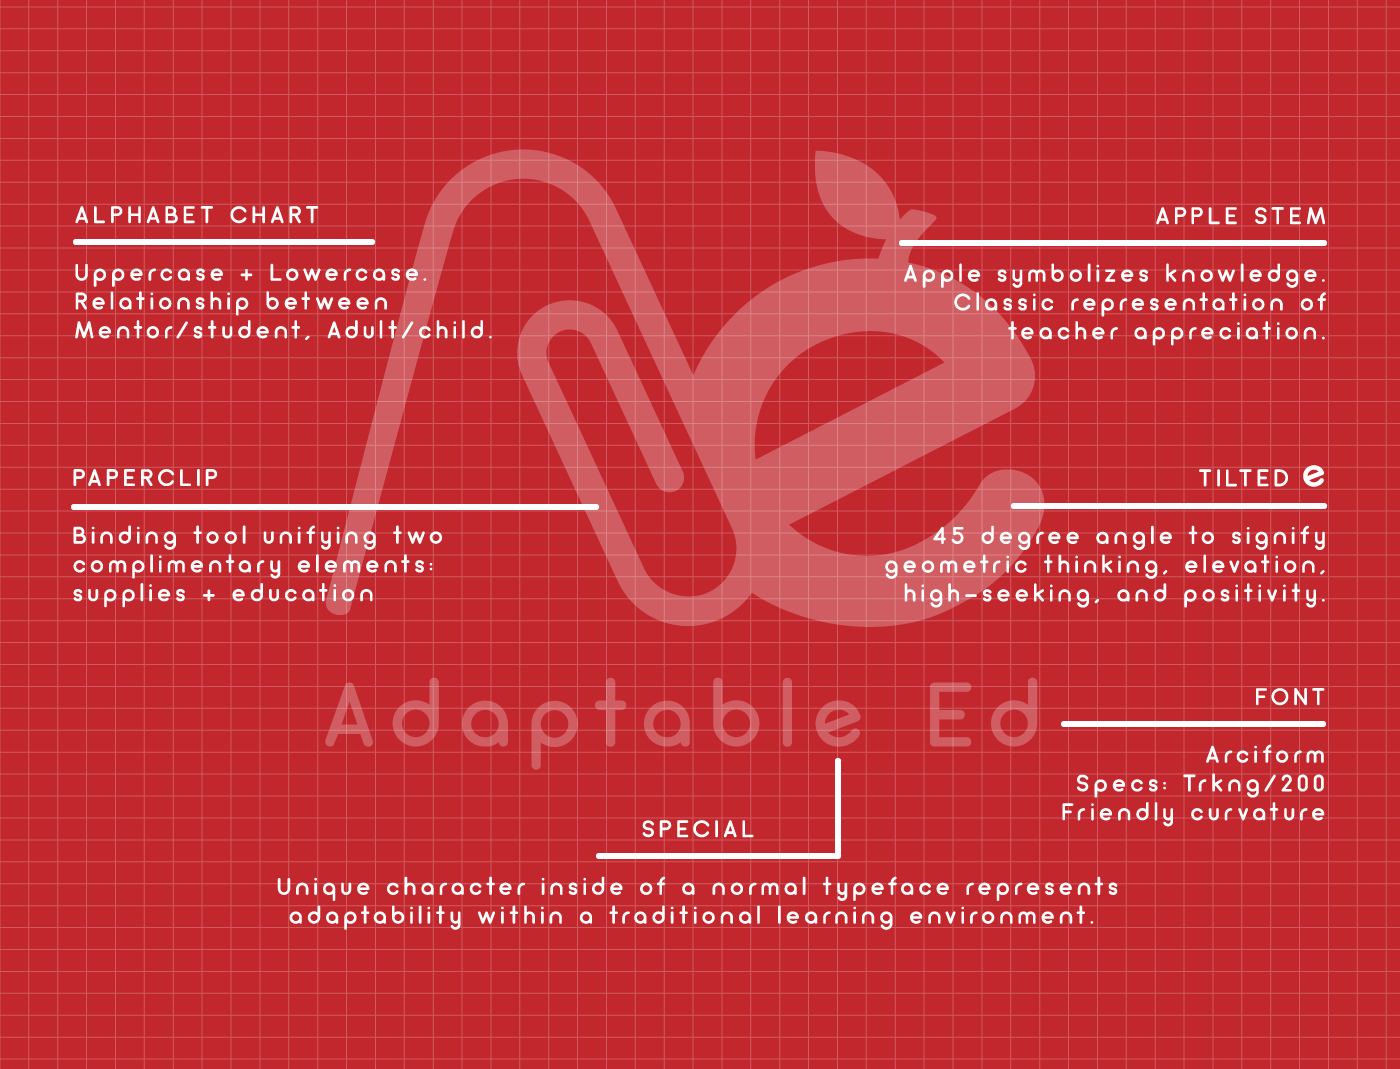 Be Unlimited brand Adaptable Ed logo breakdown